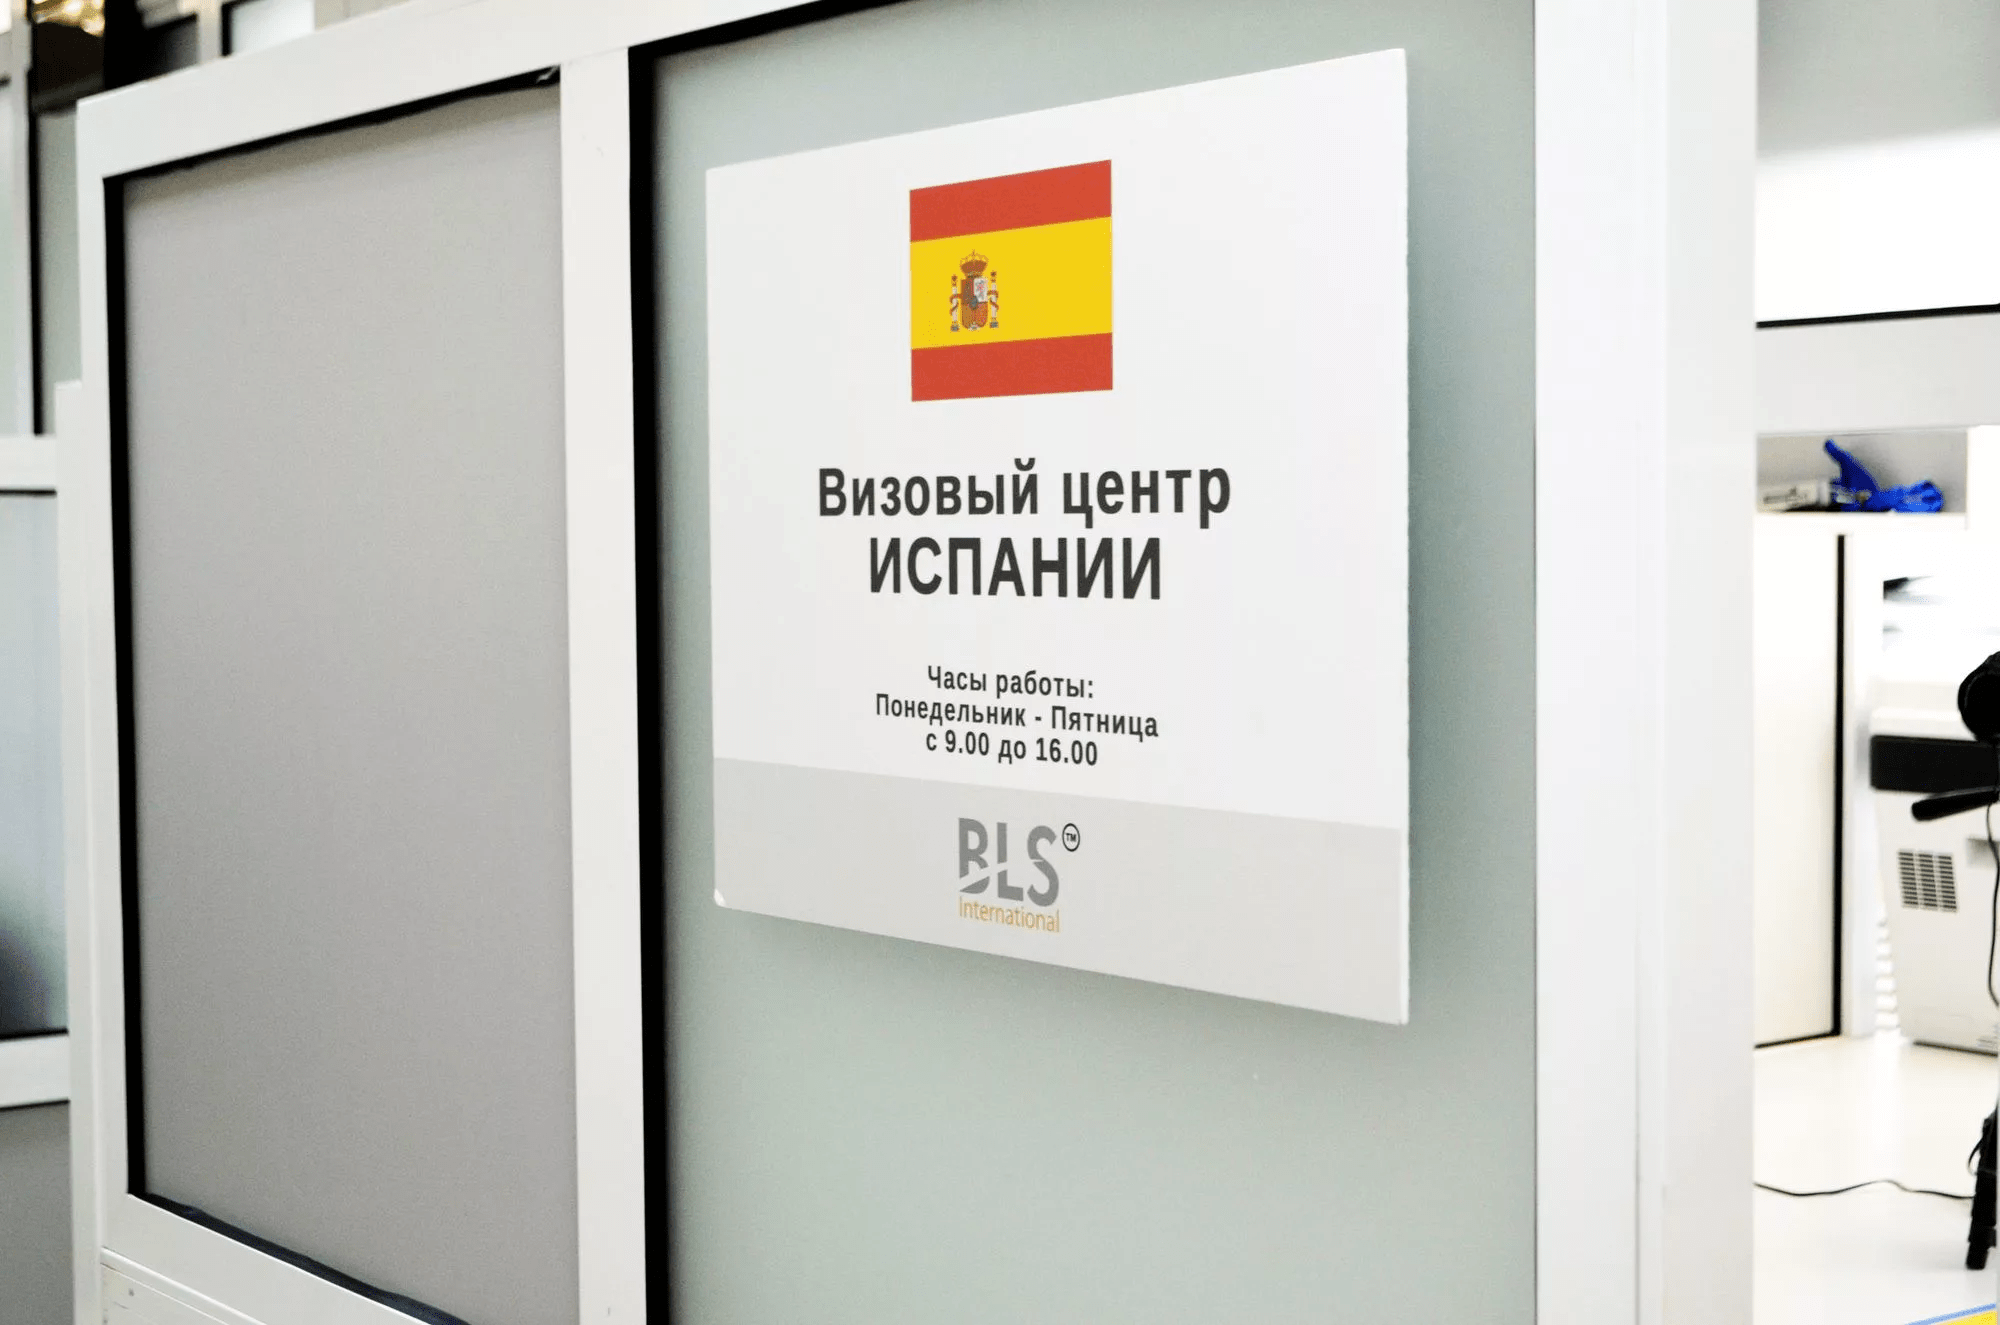 Визовый центр часы работы. Визовый центр BLS International Испания. Испанский визовый центр BLS. Калужская площадь 1 визовый центр Испании в Москве. BLS Испания визовый центр СПБ.